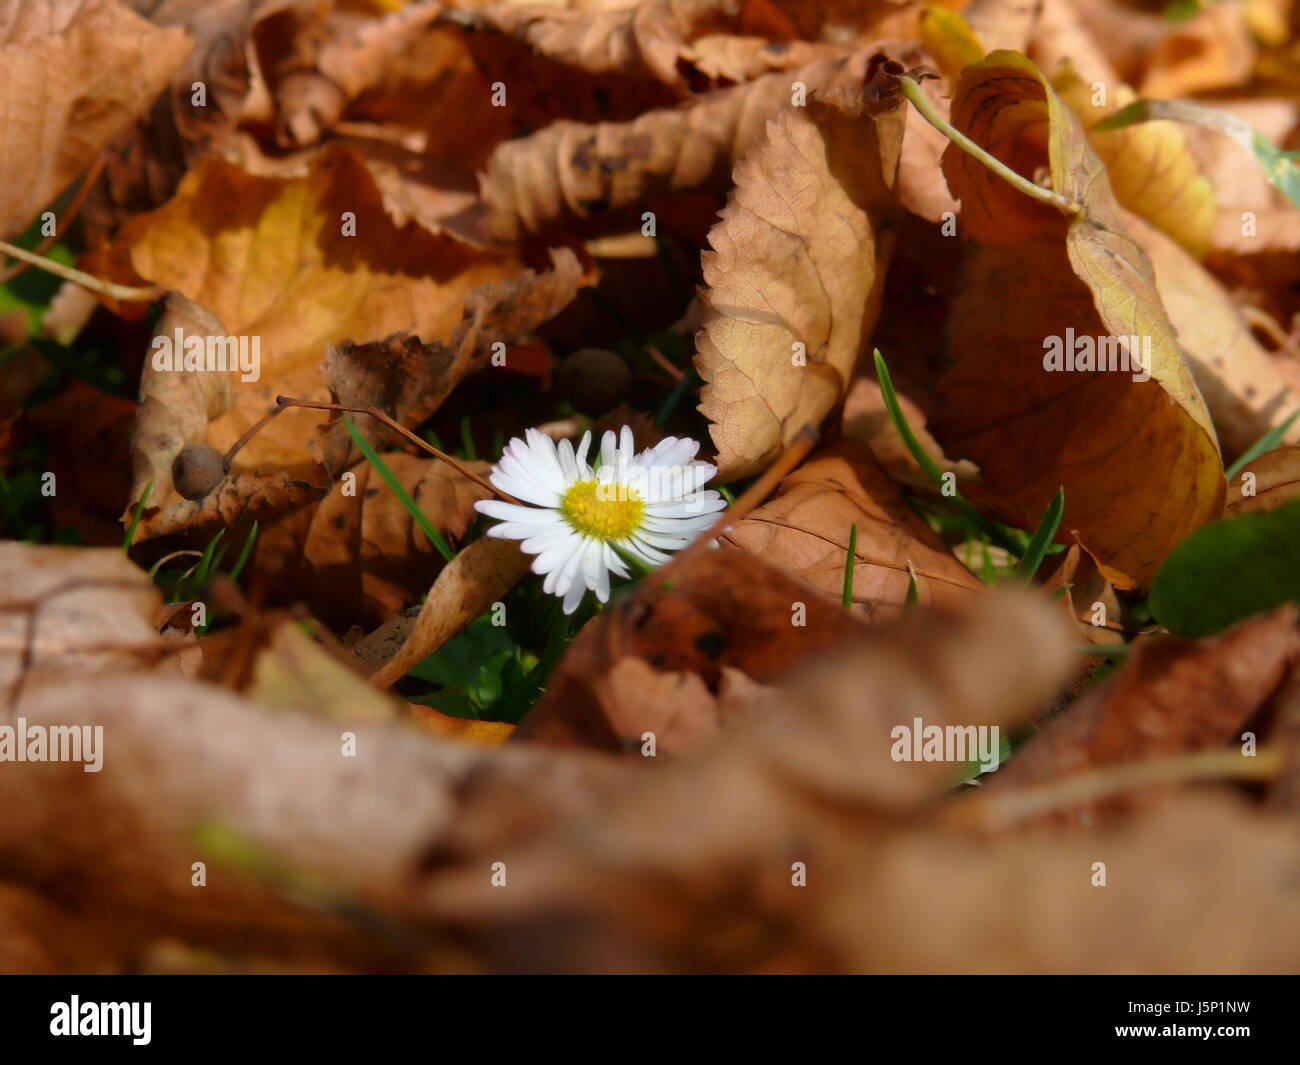 autumn equinox Stock Photo